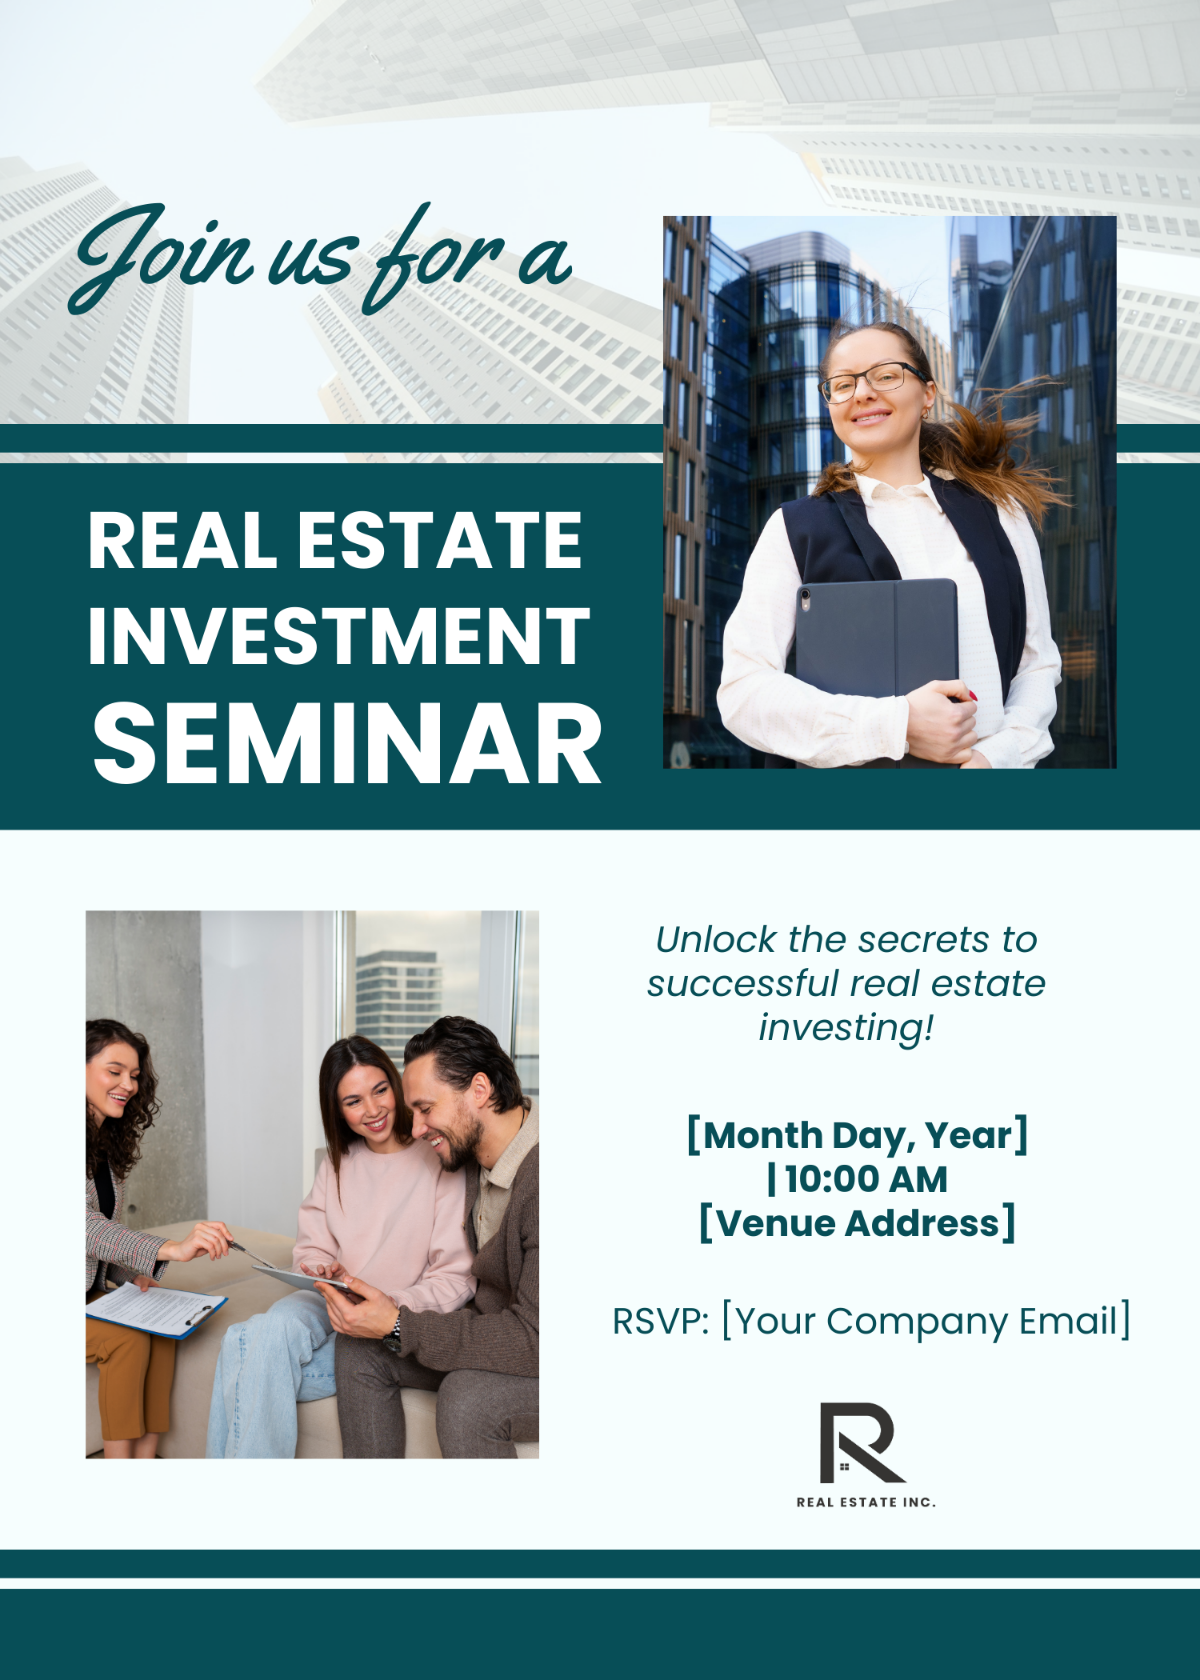 Real Estate Investment Seminar Invitation Card Template